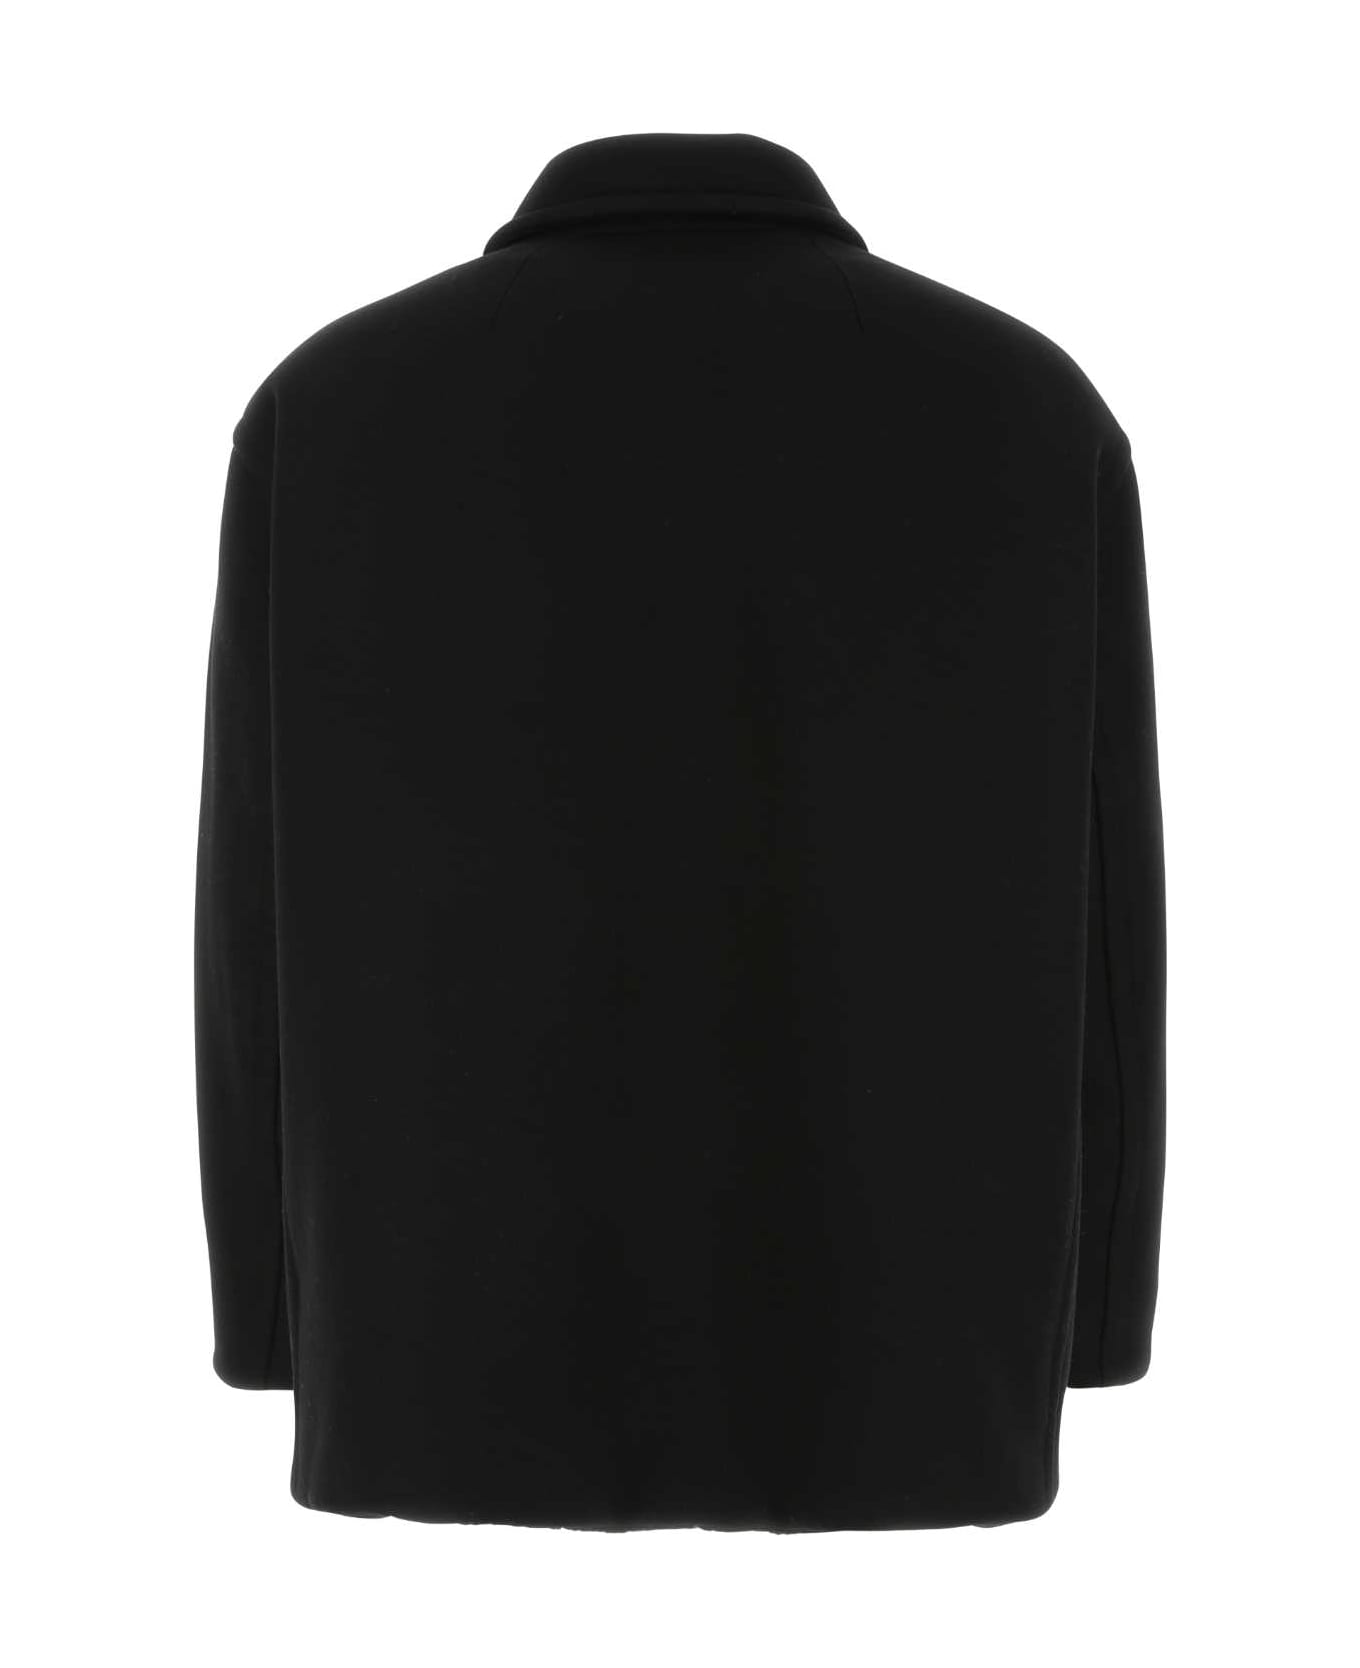 Valentino Garavani Black Wool Blend Coat - 0NO